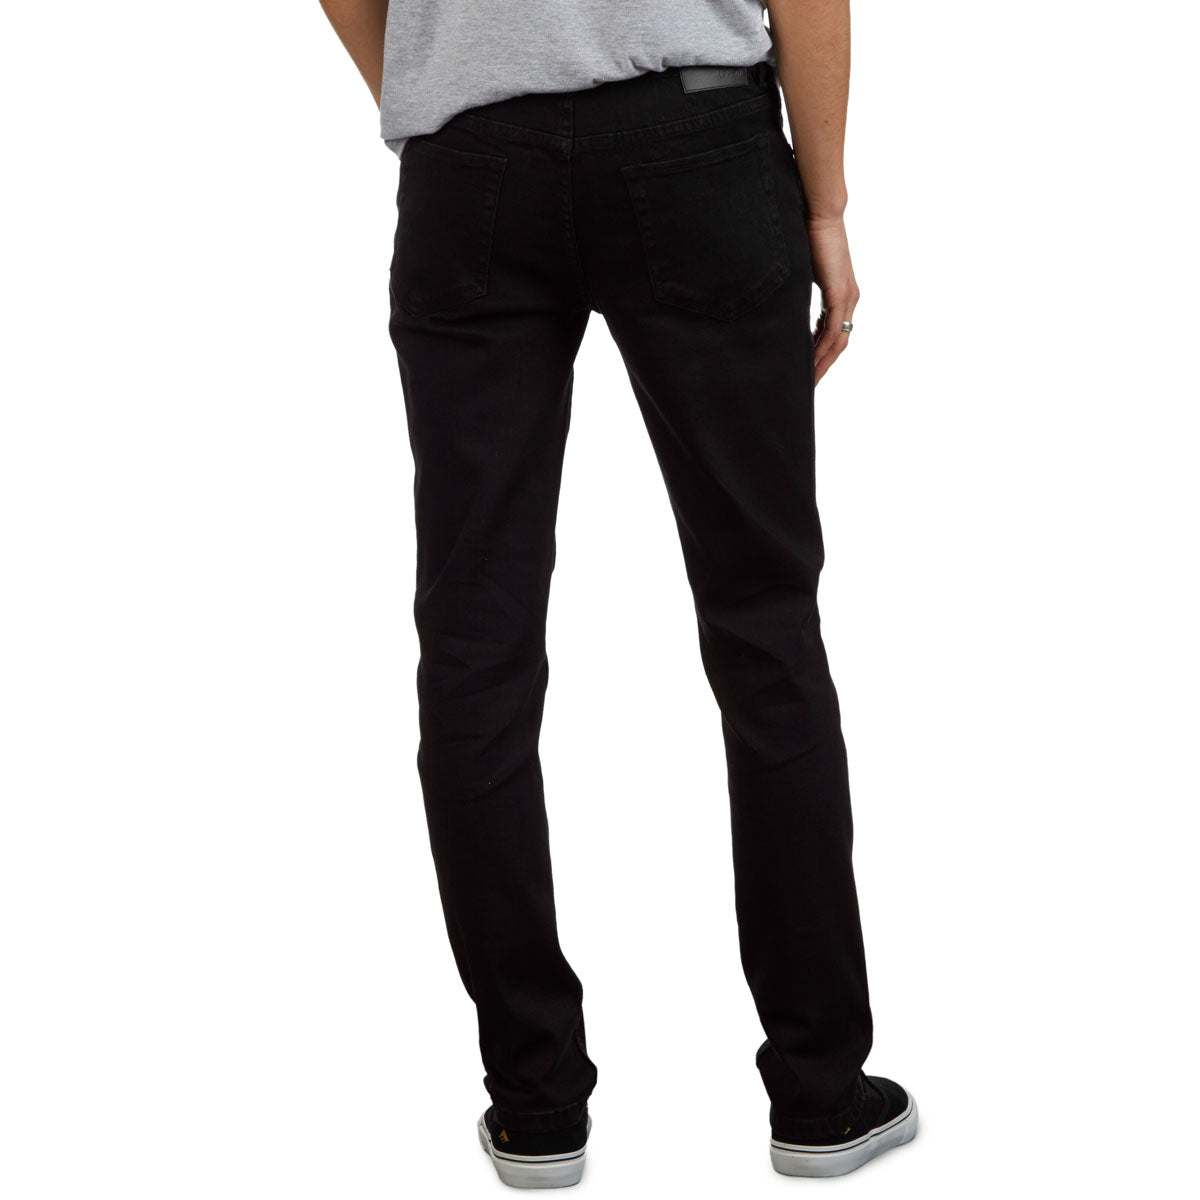 CCS Standard Plus Skinny Denim Jeans - Overdyed Black image 3